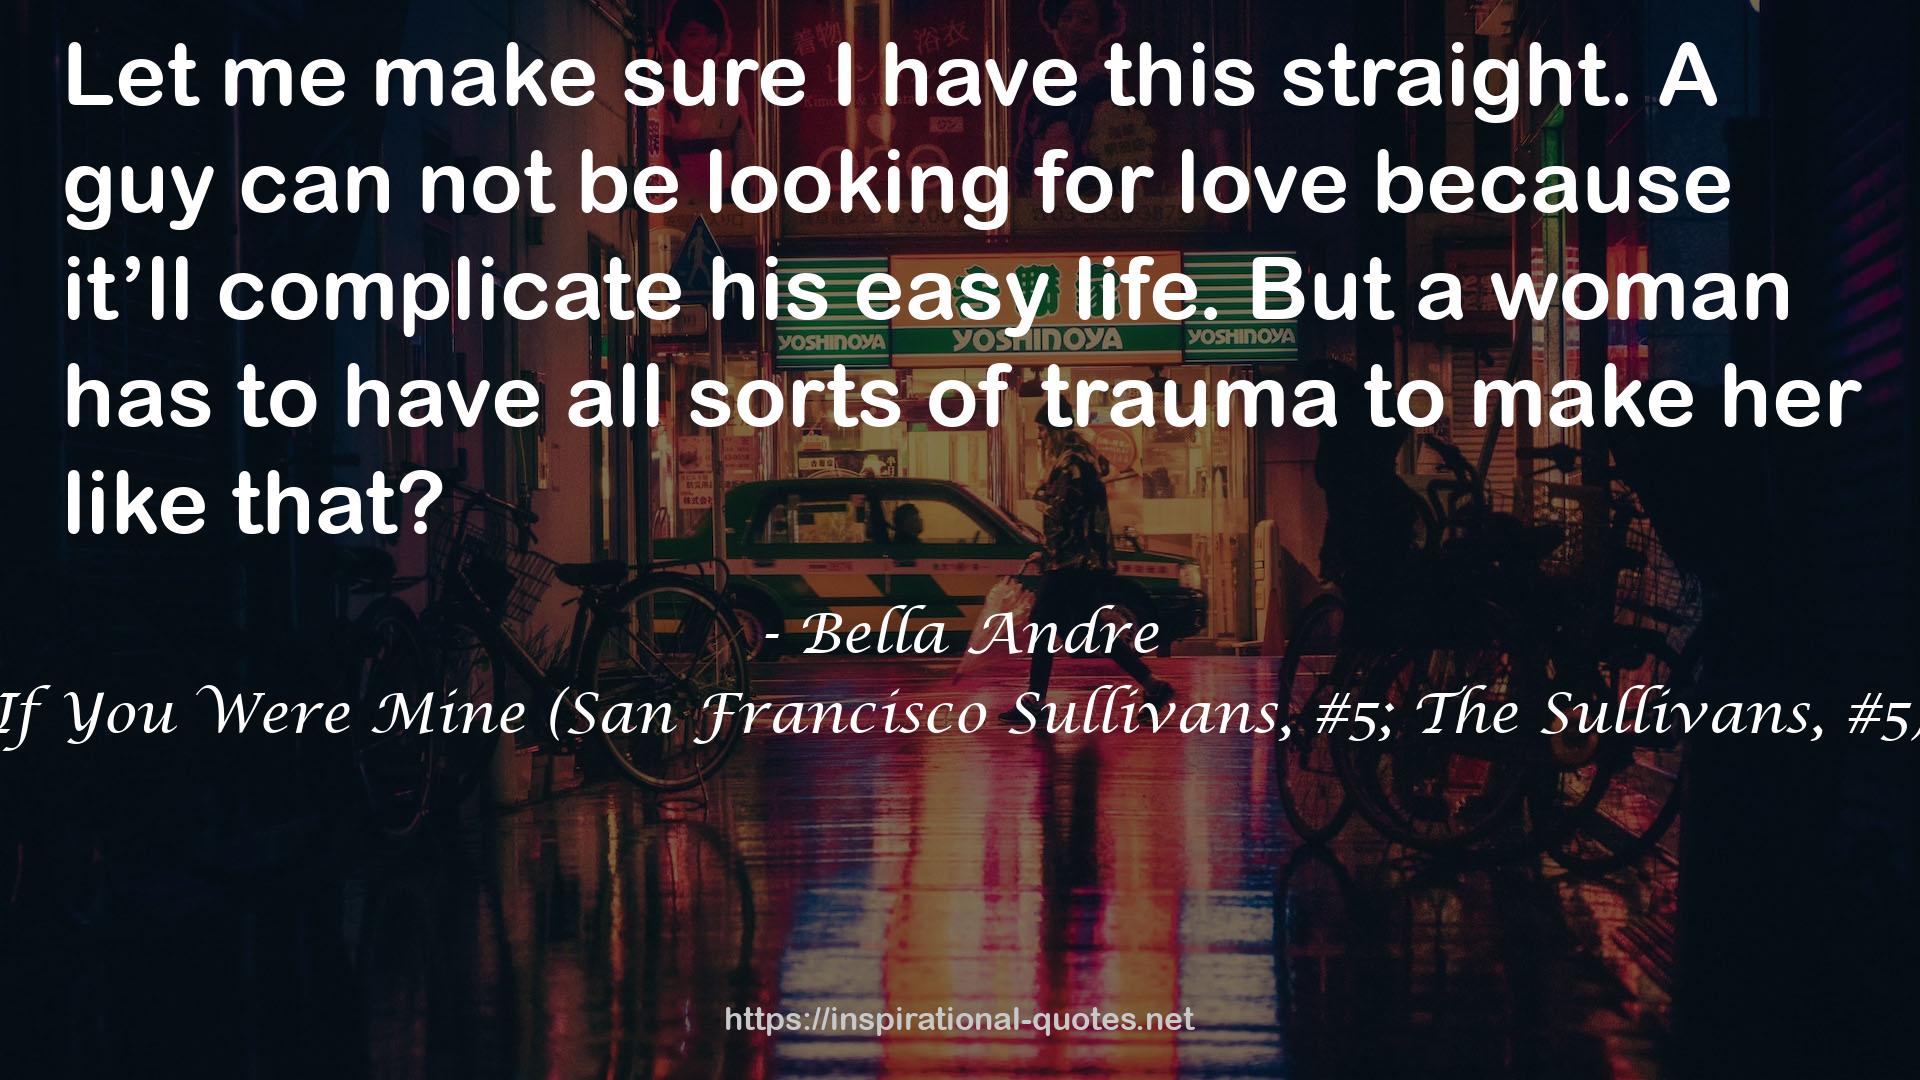 If You Were Mine (San Francisco Sullivans, #5; The Sullivans, #5) QUOTES